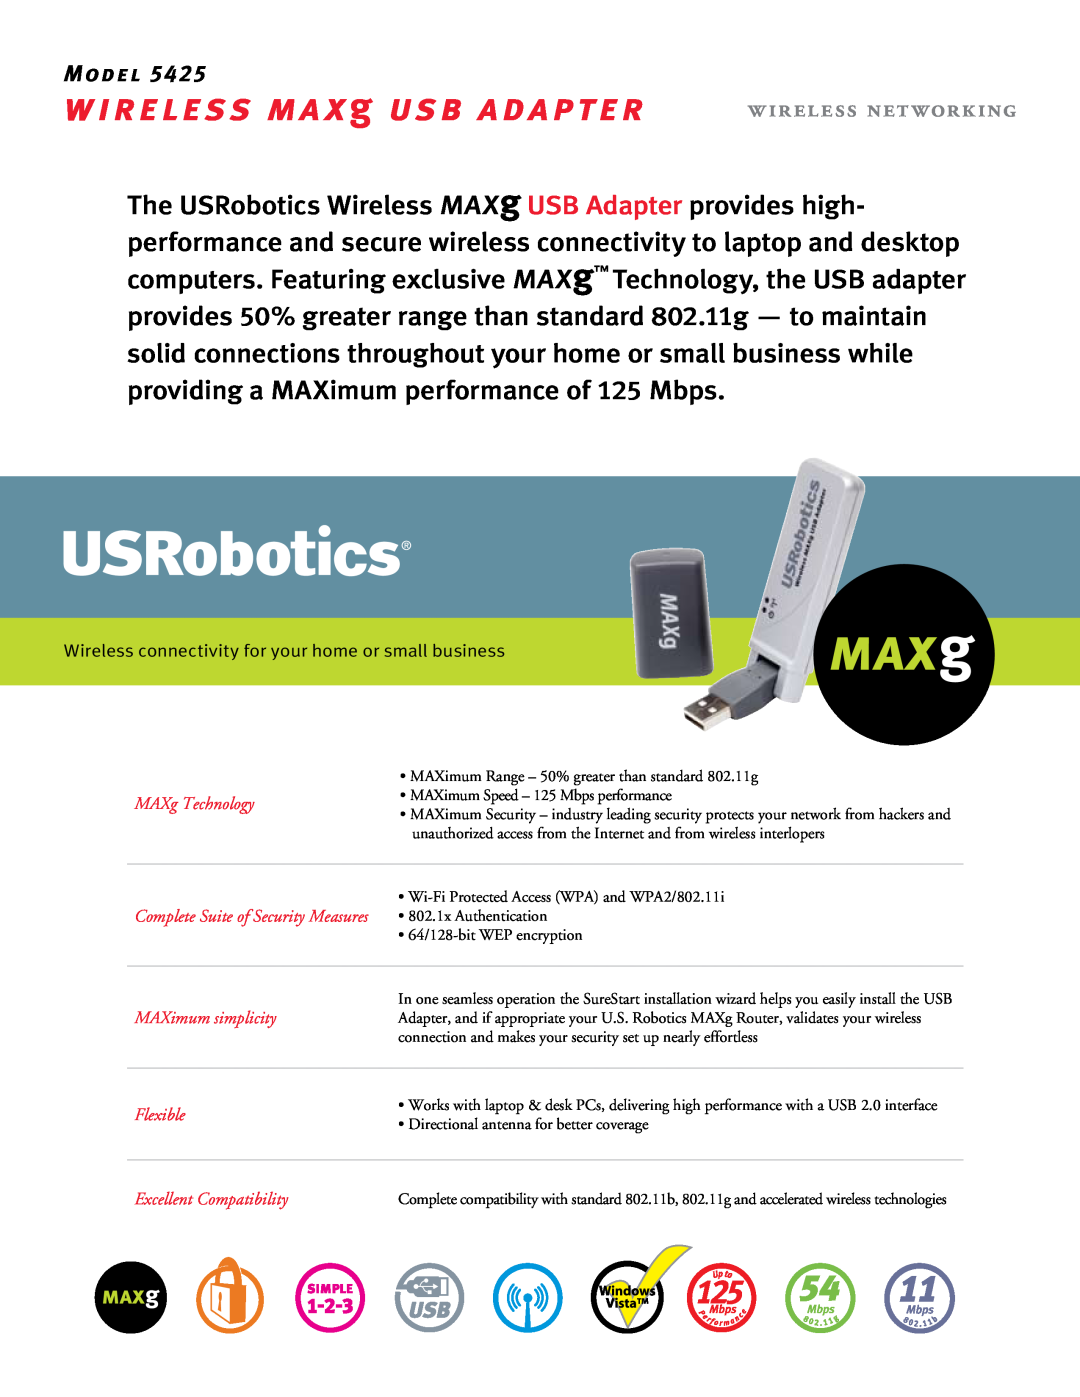 USRobotics 5425 manual WIRELESS MAX g USB ADAPTER, Model, Wireless Networking, MAXg Technology, MAXimum simplicity 